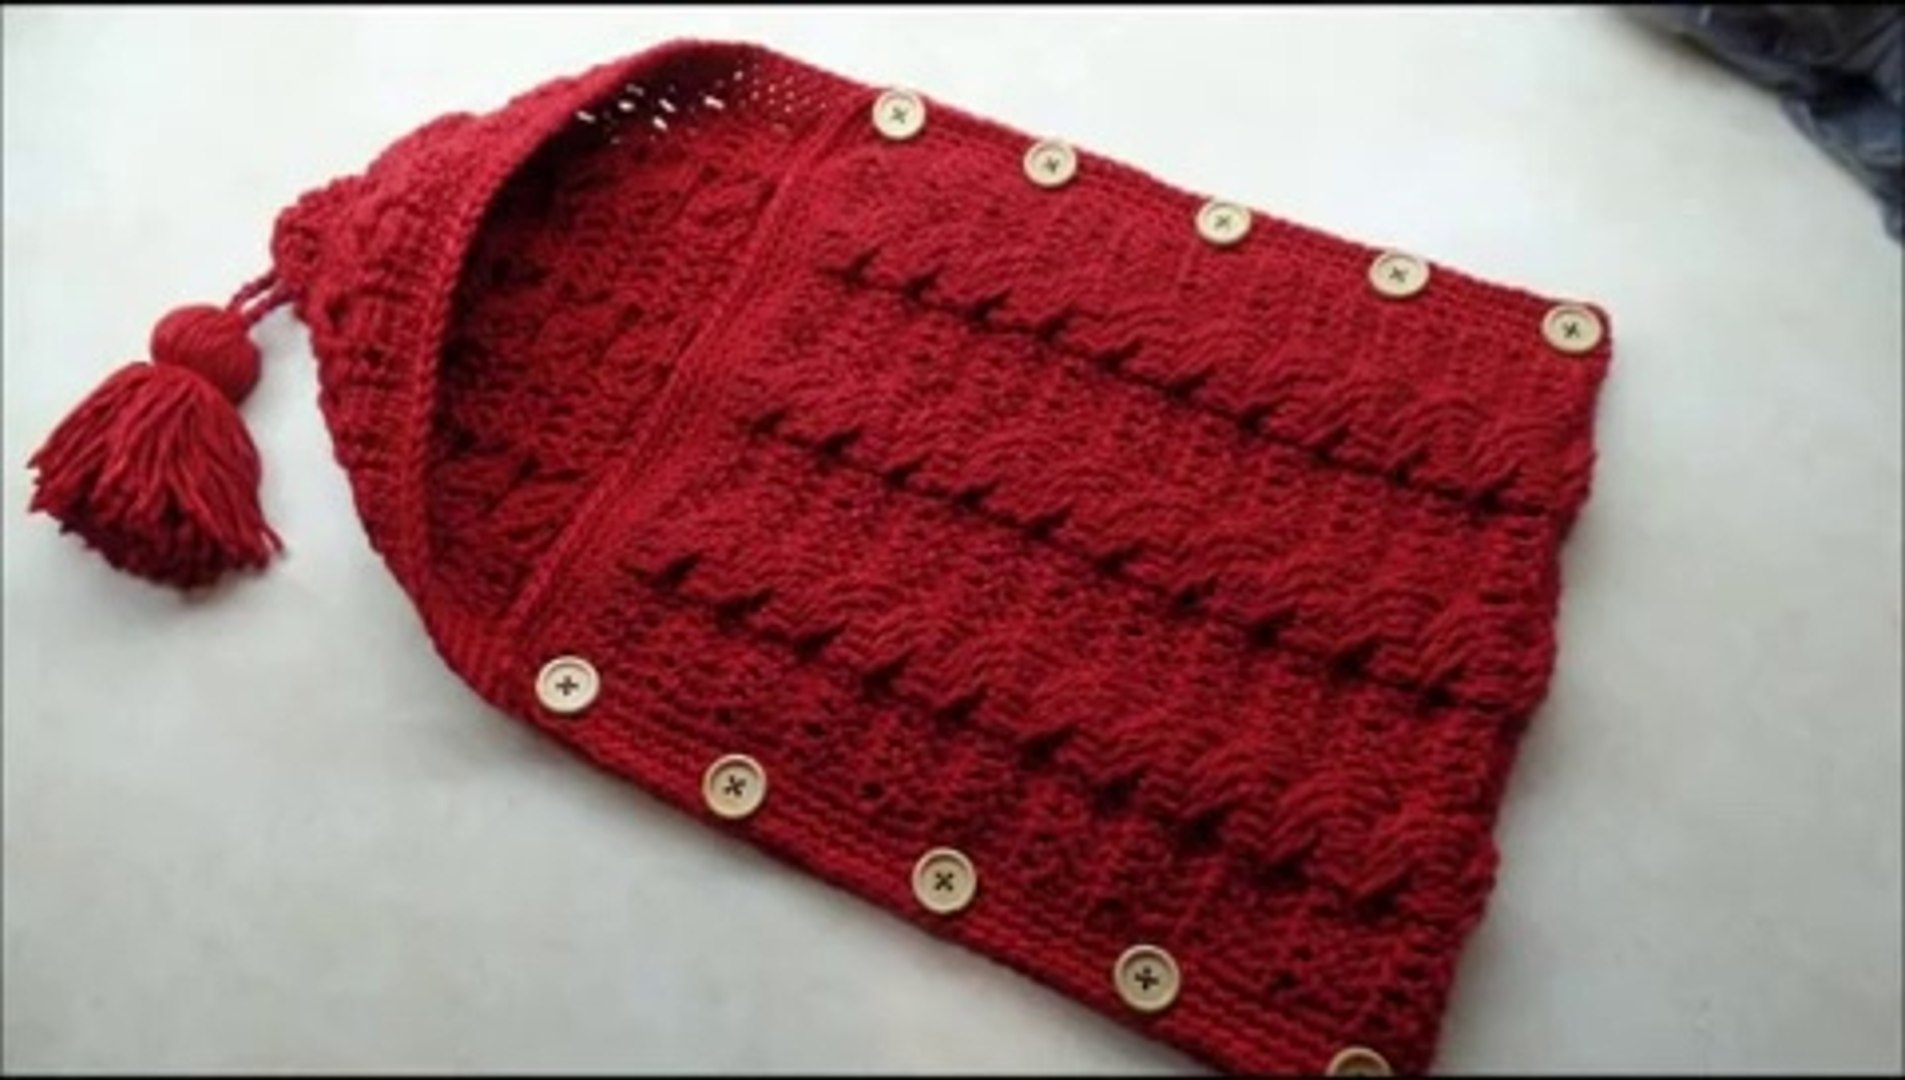 How to Crochet Cable Stitch Newborn Baby Bunting Cocoon | عمل بطانيه كروشيه  بزنط لحمل الطفل - فيديو Dailymotion